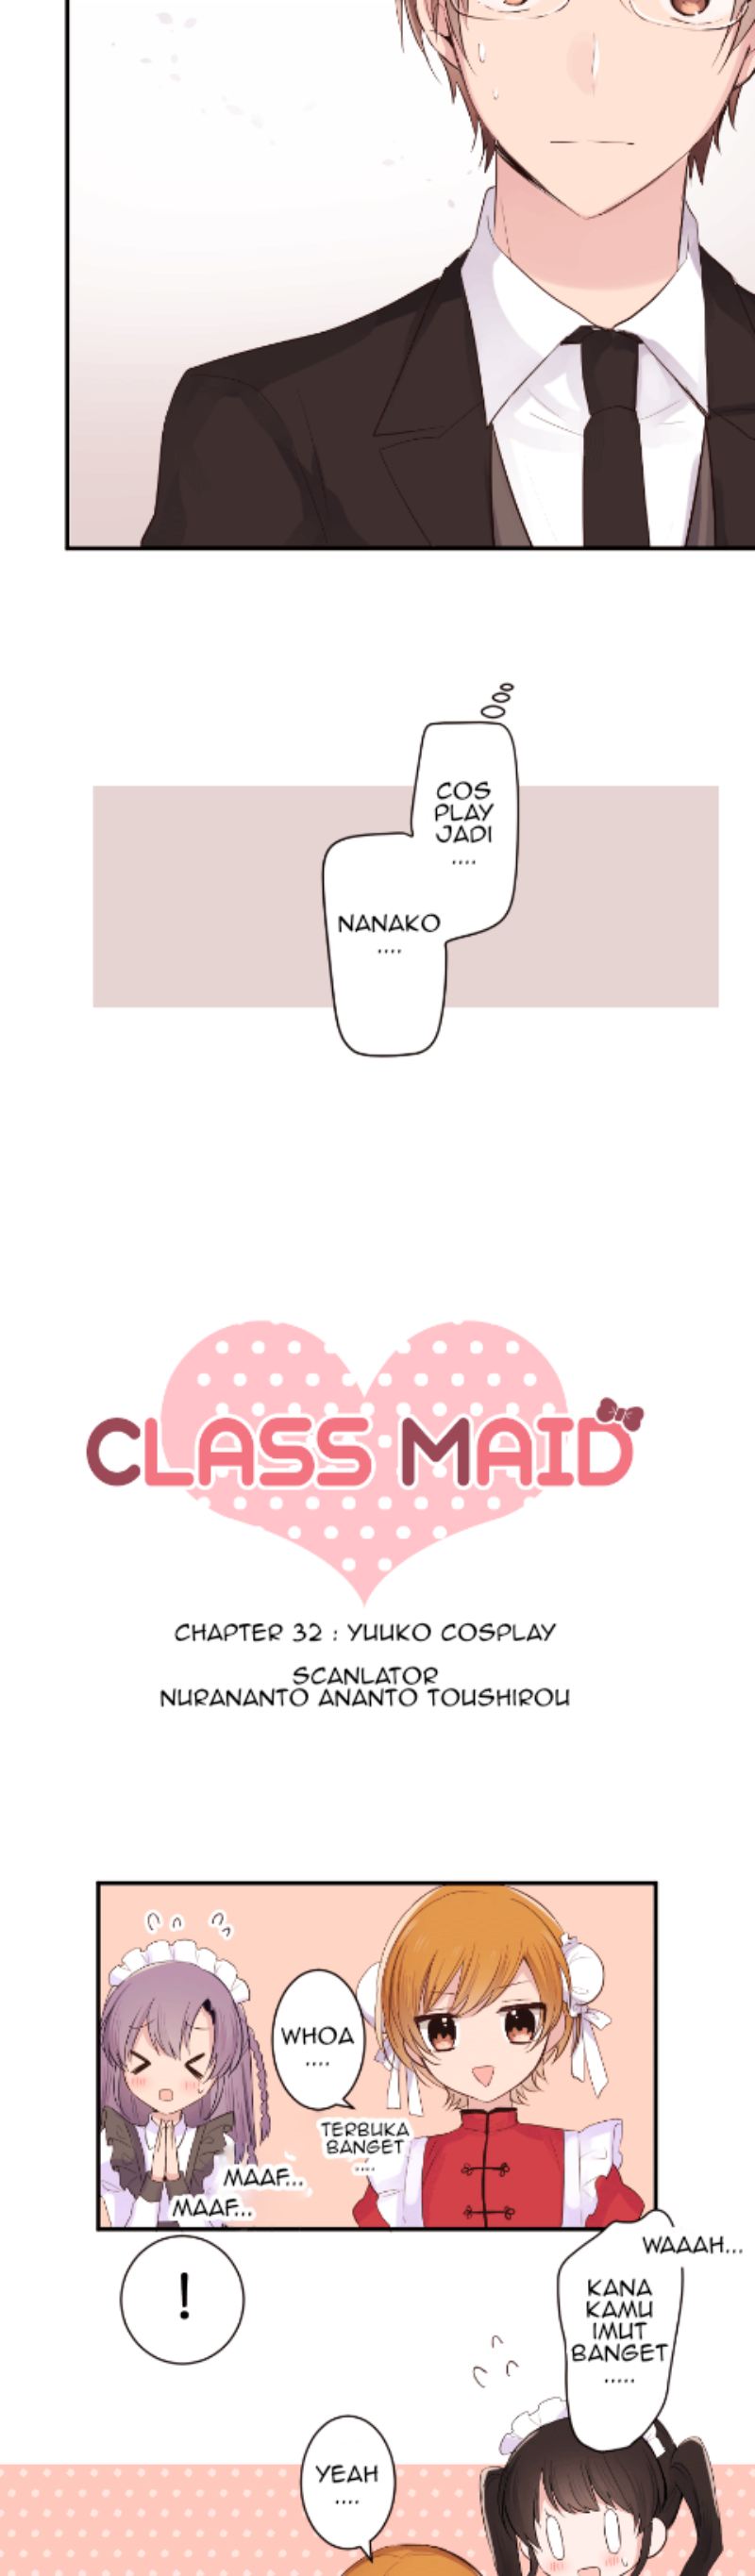 Class Maid (shimamura) Chapter 32